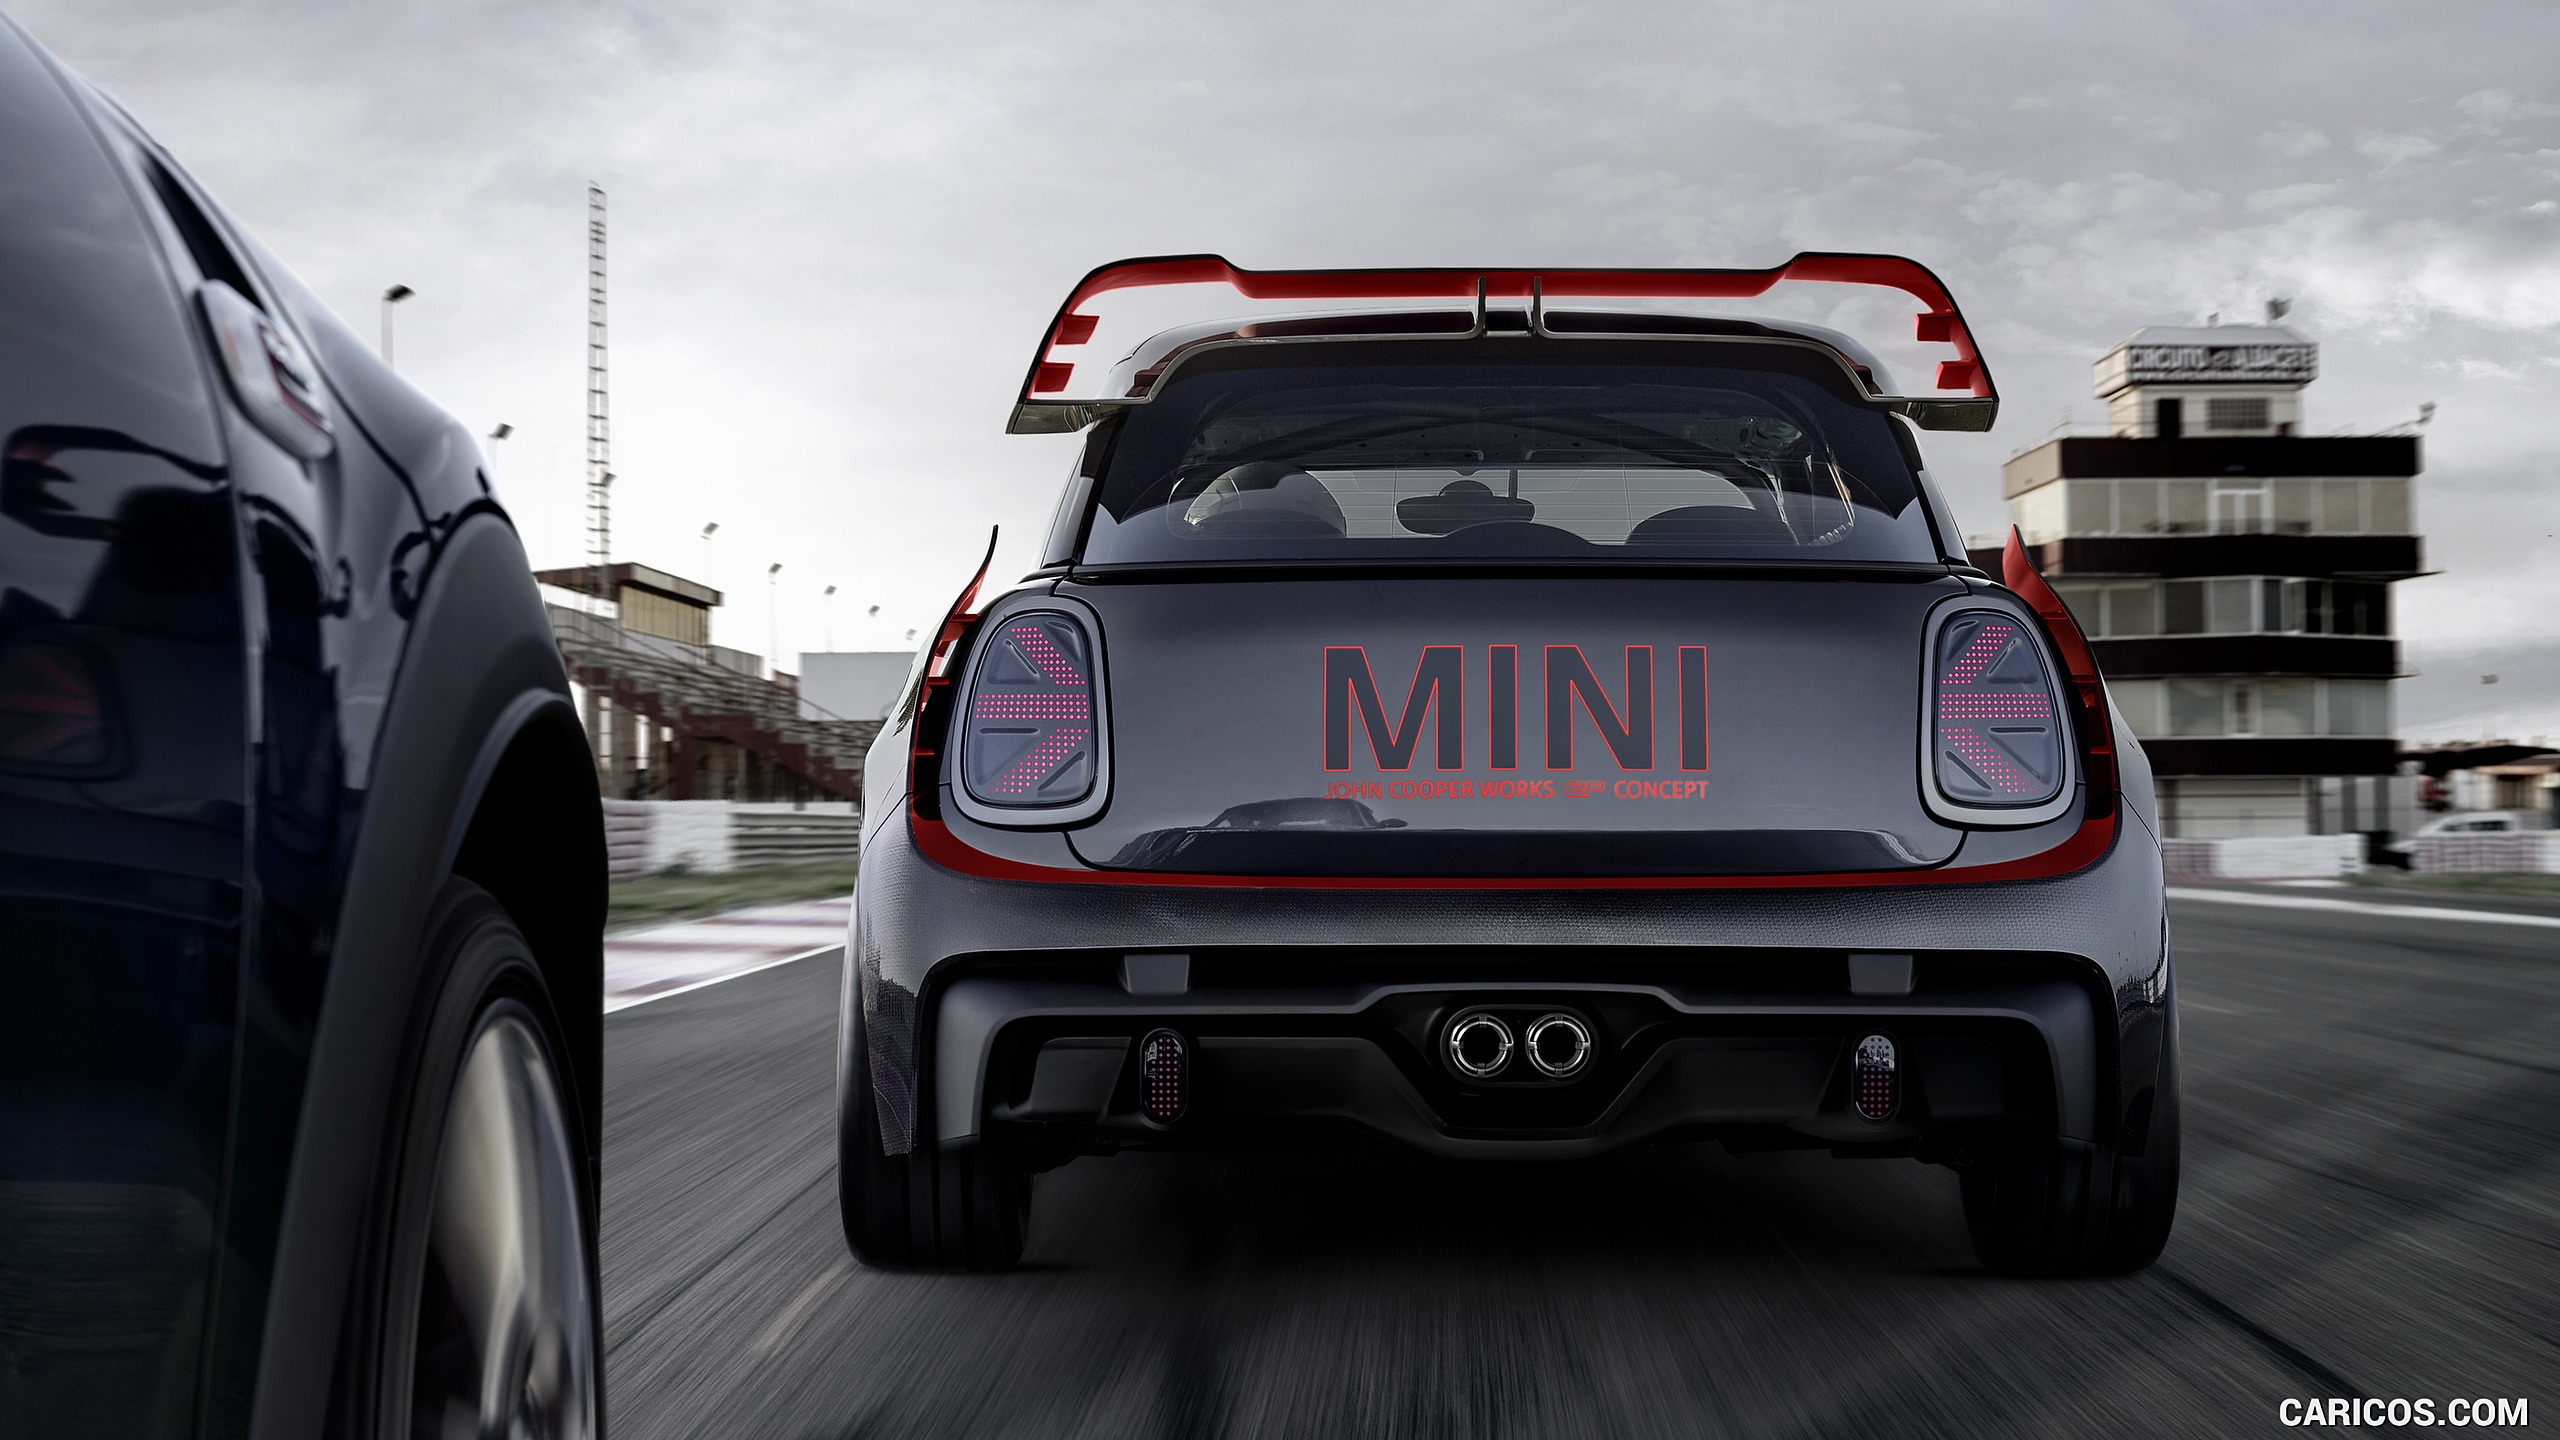 2017 MINI John Cooper Works GP Concept - Rear, #4 of 47